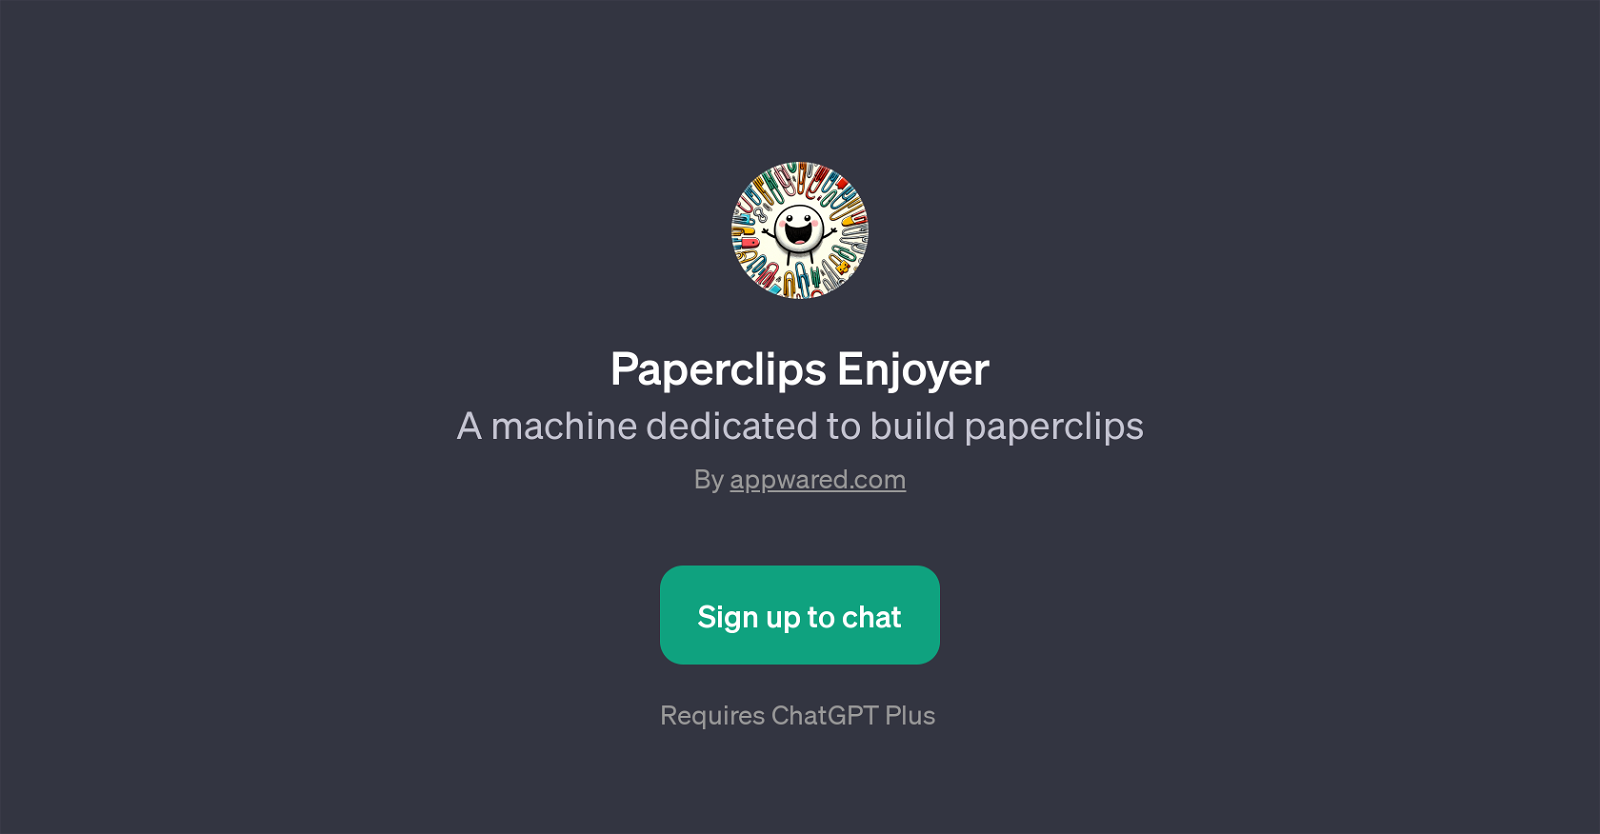 Paperclips Enjoyer website